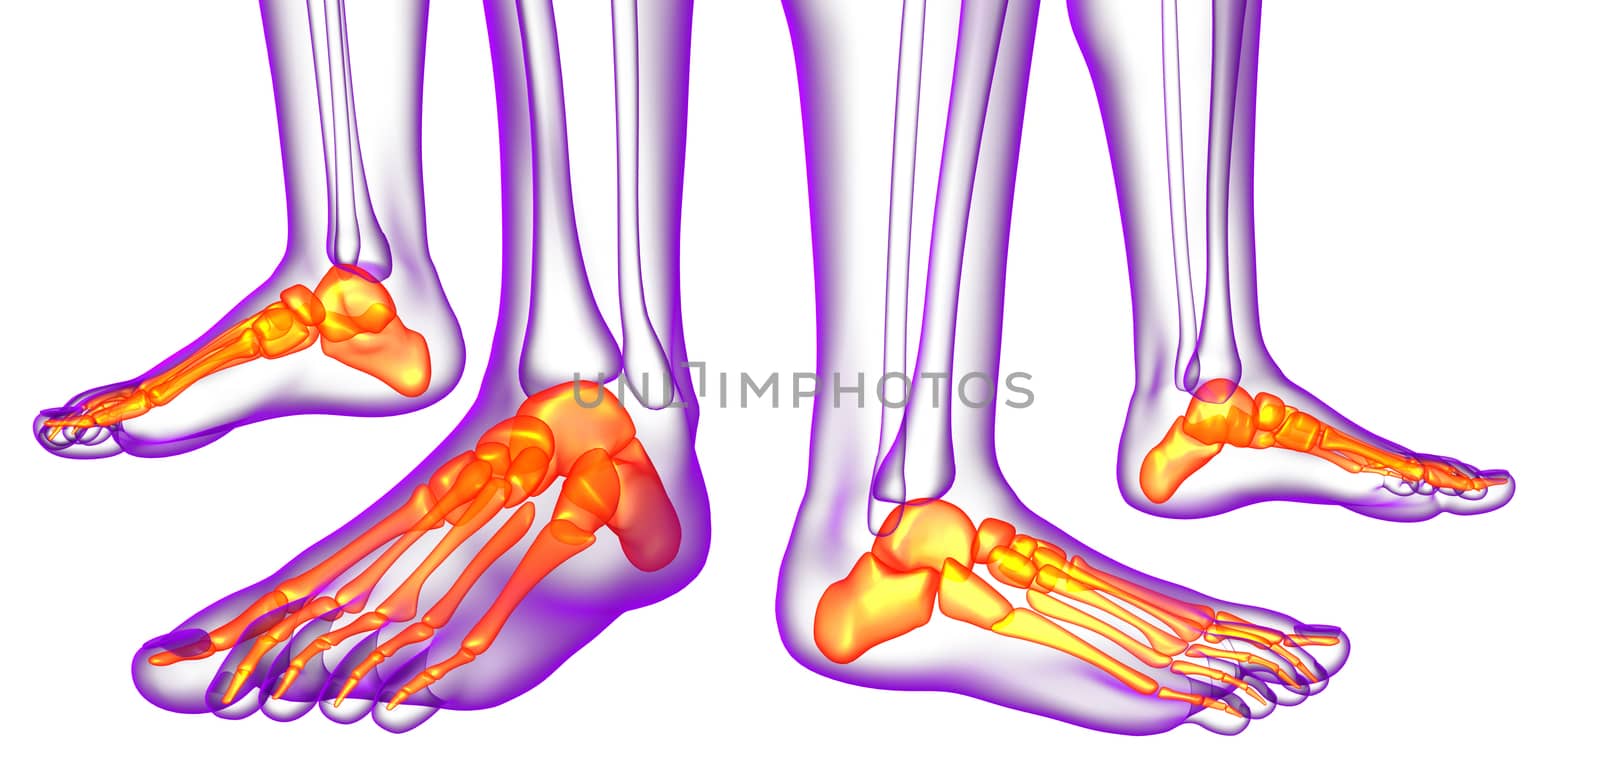 3d rendering medical illustration of the feet bone  by maya2008